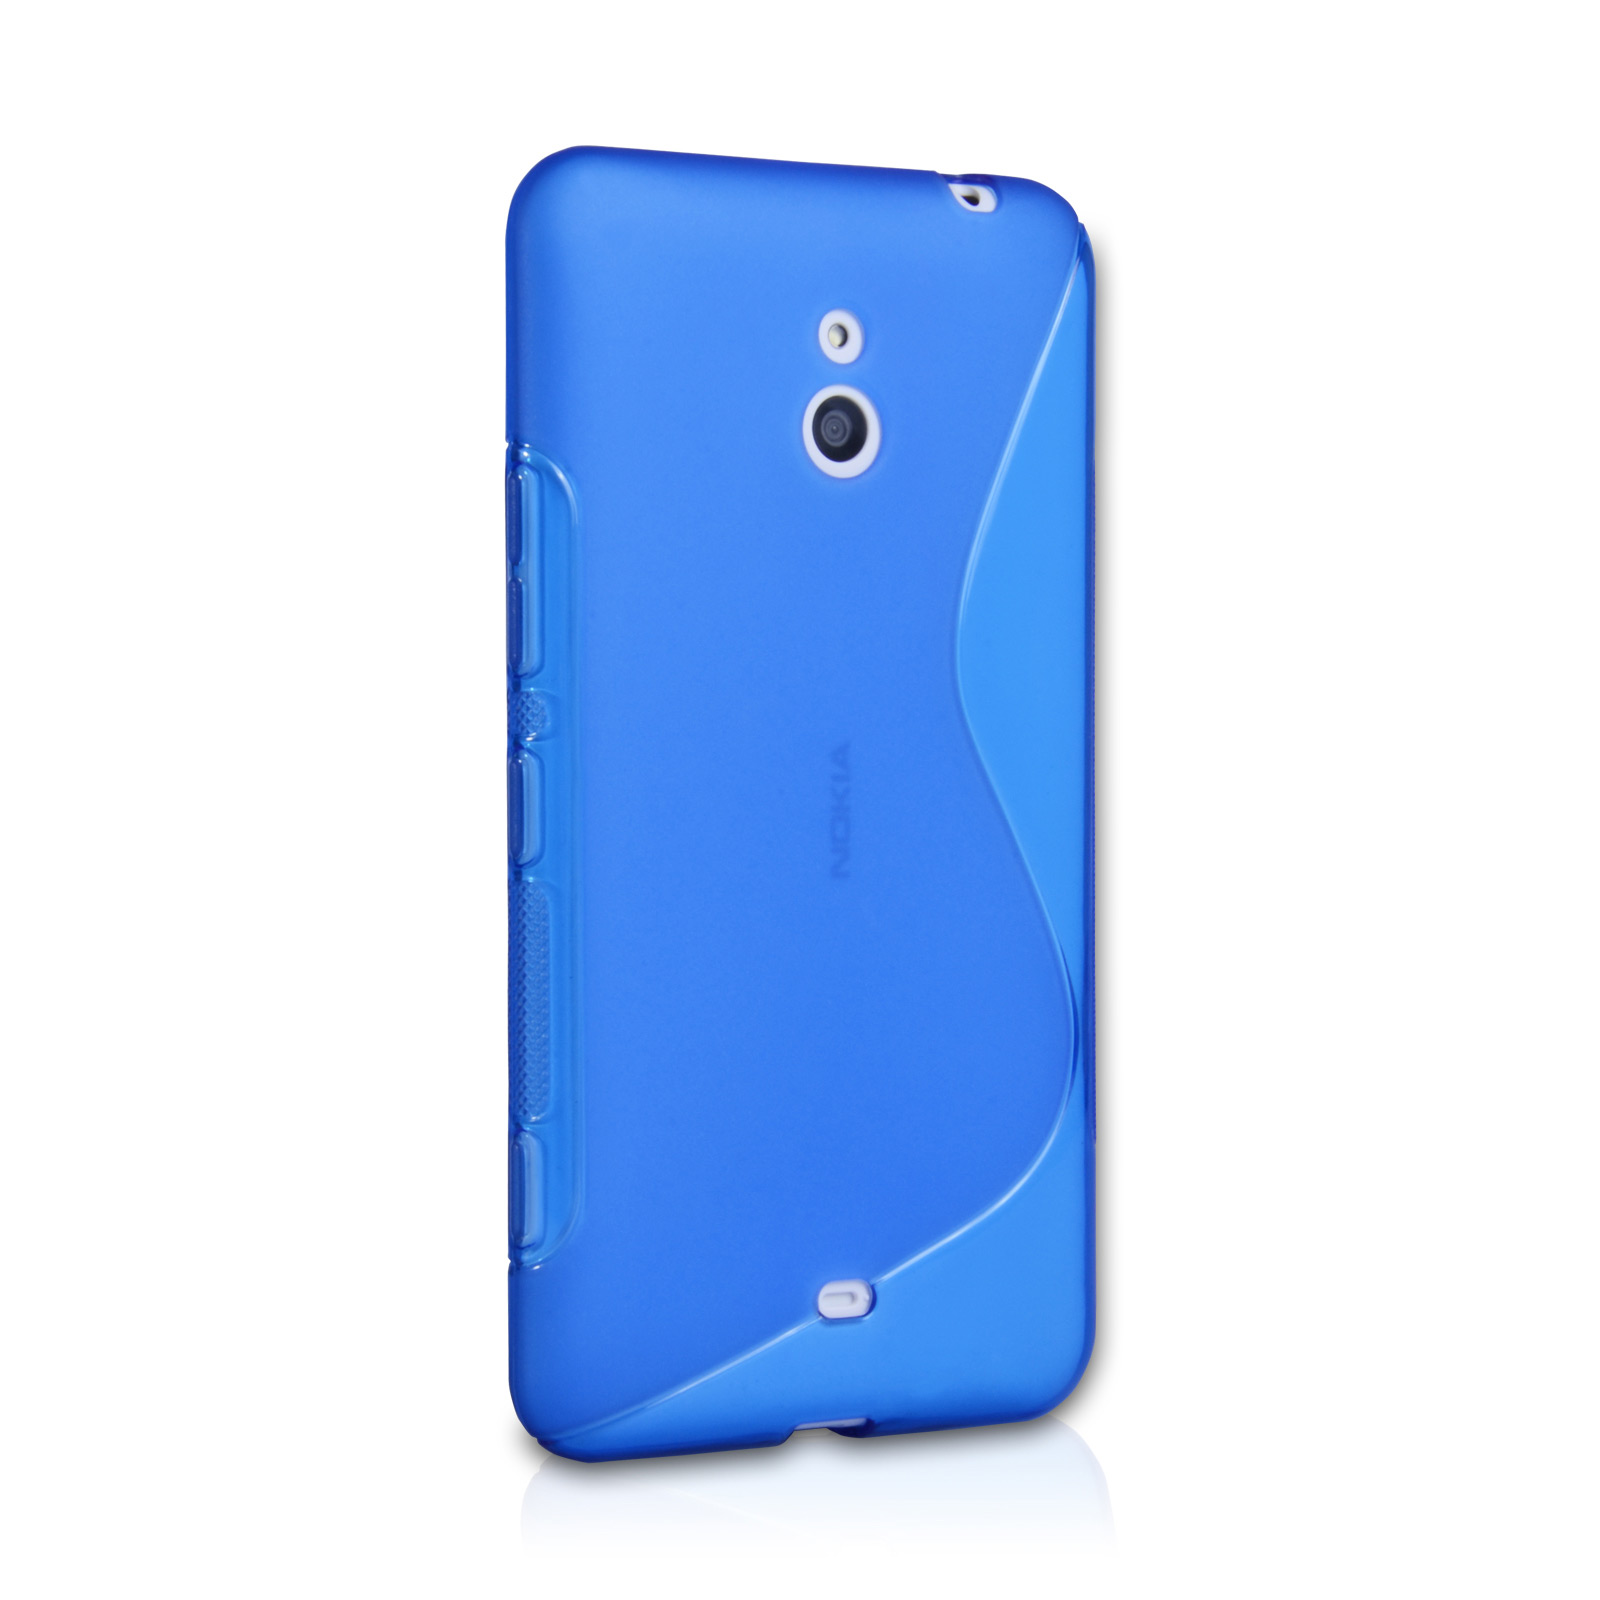 Caseflex Nokia Lumia 1320 Silicone Gel S-Line Case - Blue